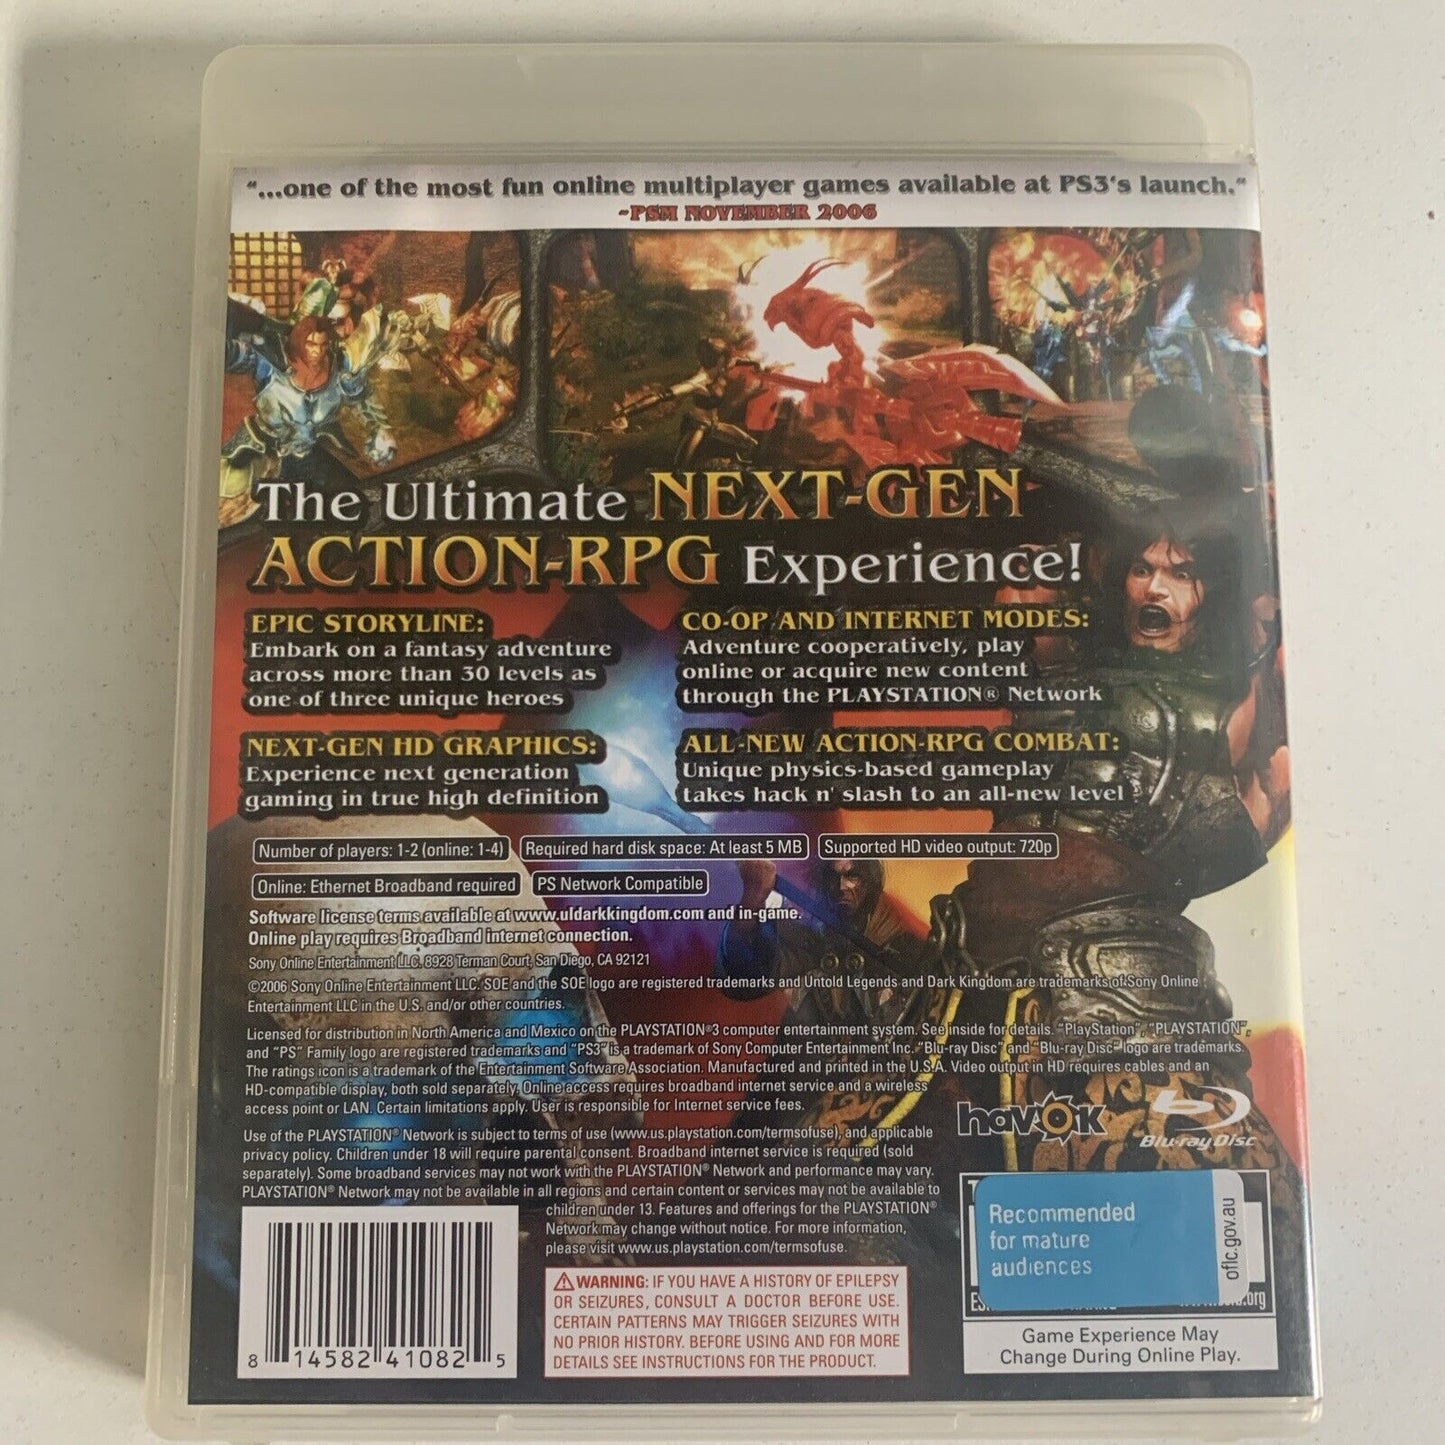 Untold Legends Dark Kingdom PlayStation 3 PS3 Game